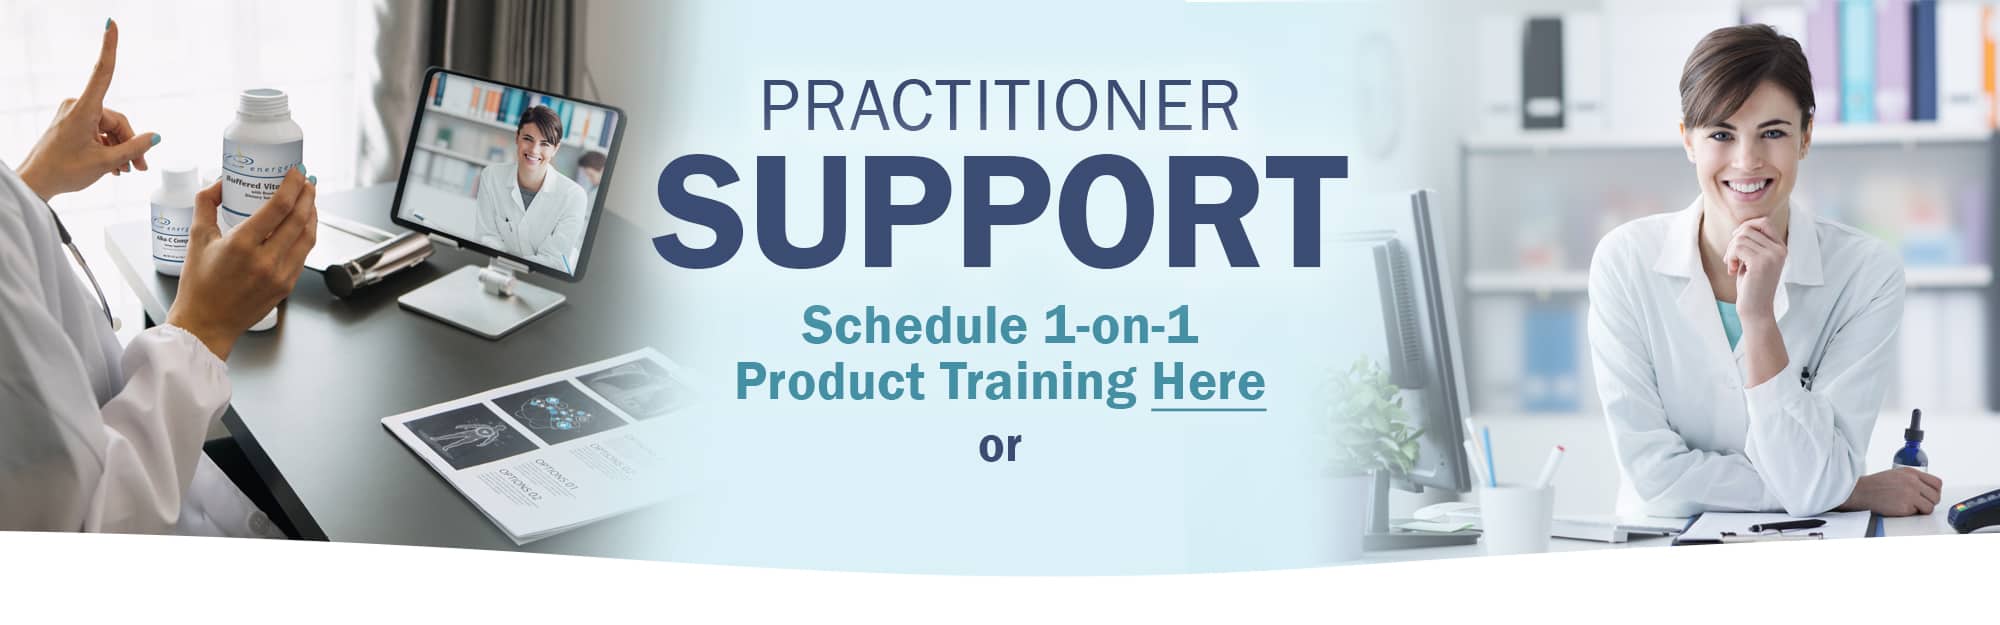 Practitioner Support Header